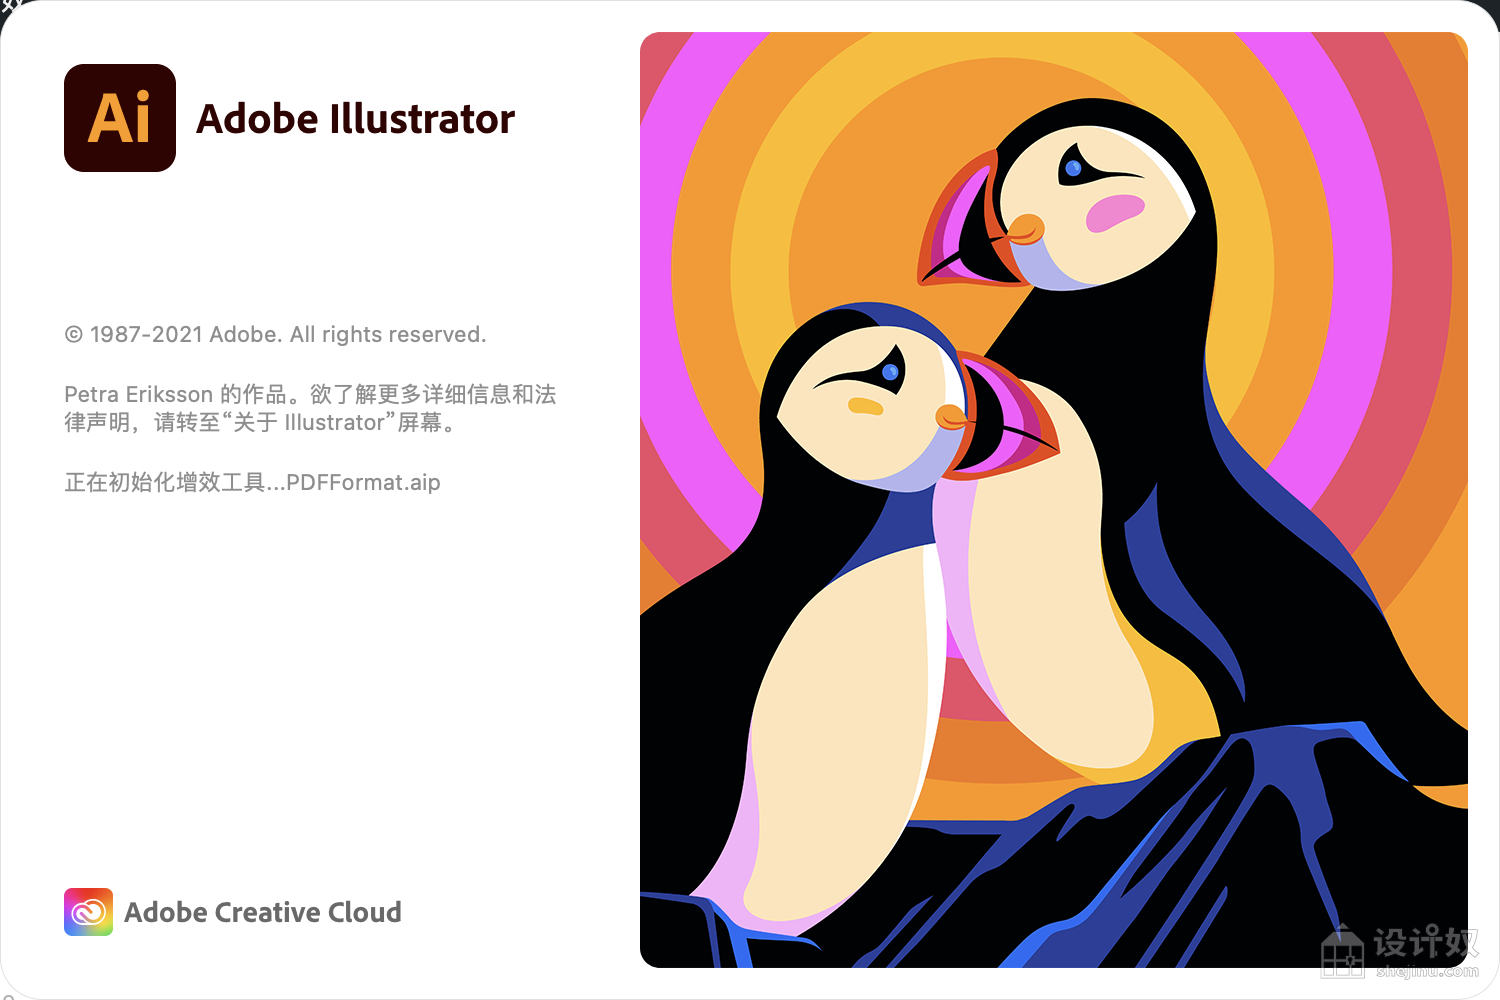 【MAC M1】亲测可用 Illustrator 2022 for Mac v26.0.2 AI ai 2022中文版M1专用